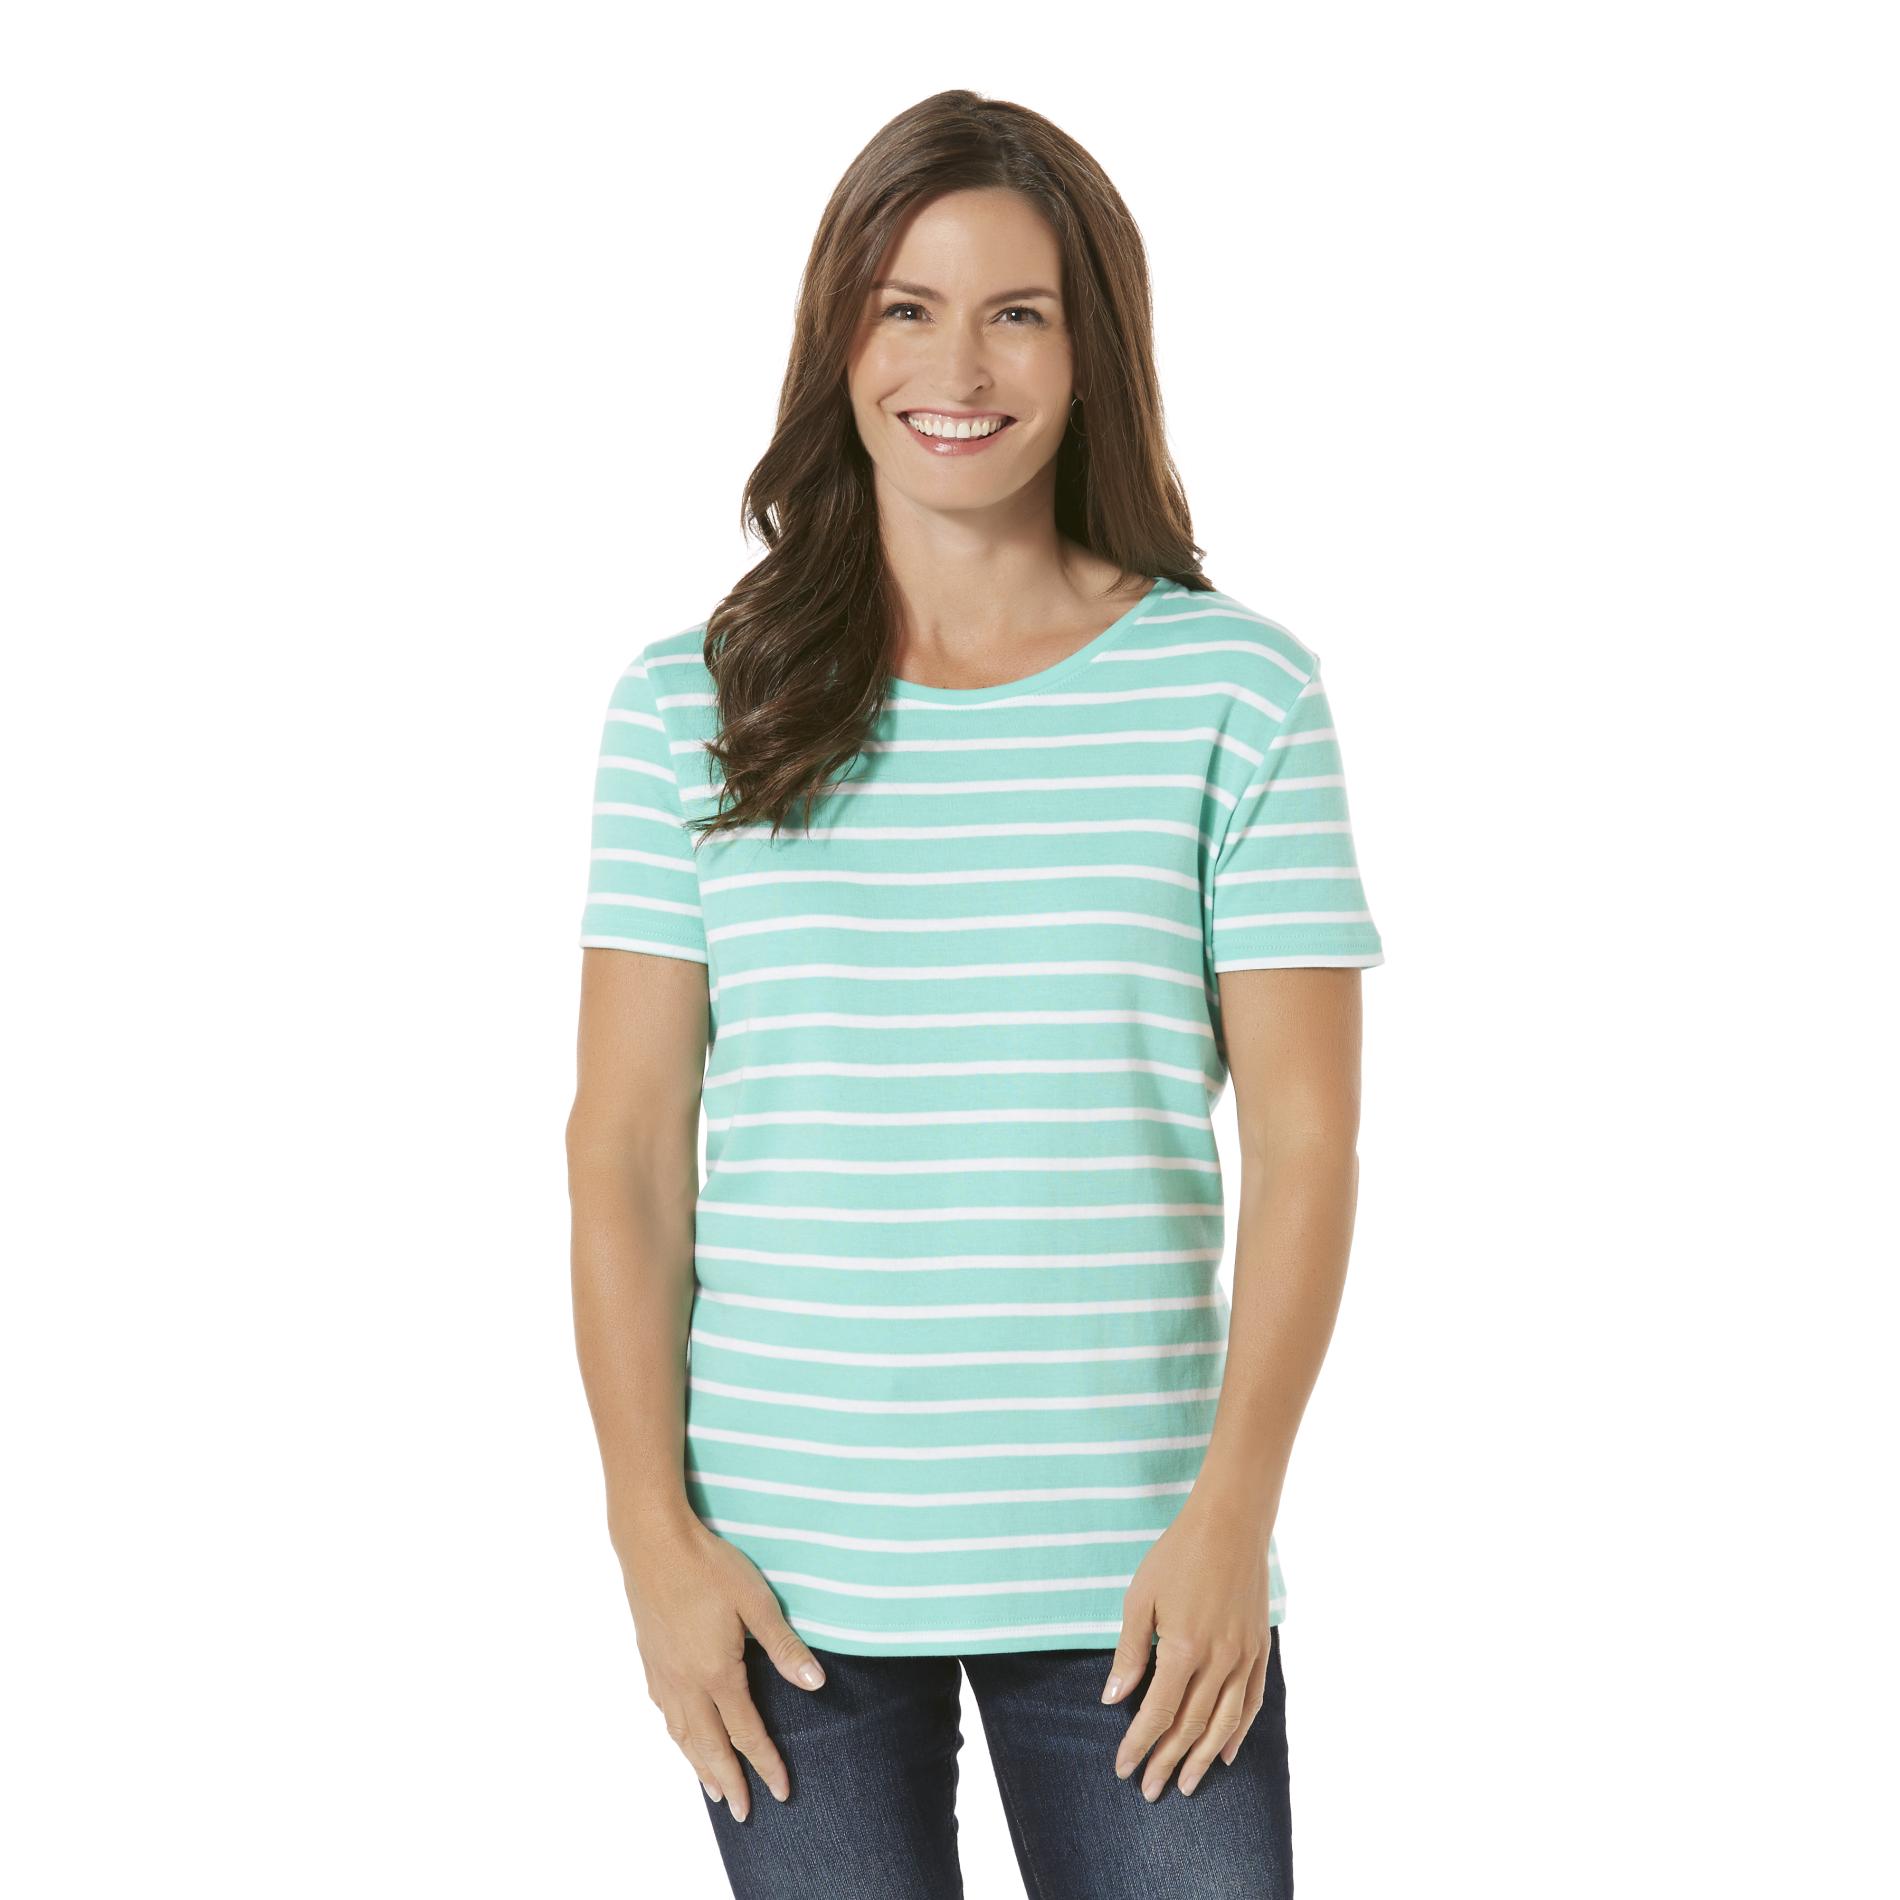 Petite's T-Shirt - Striped